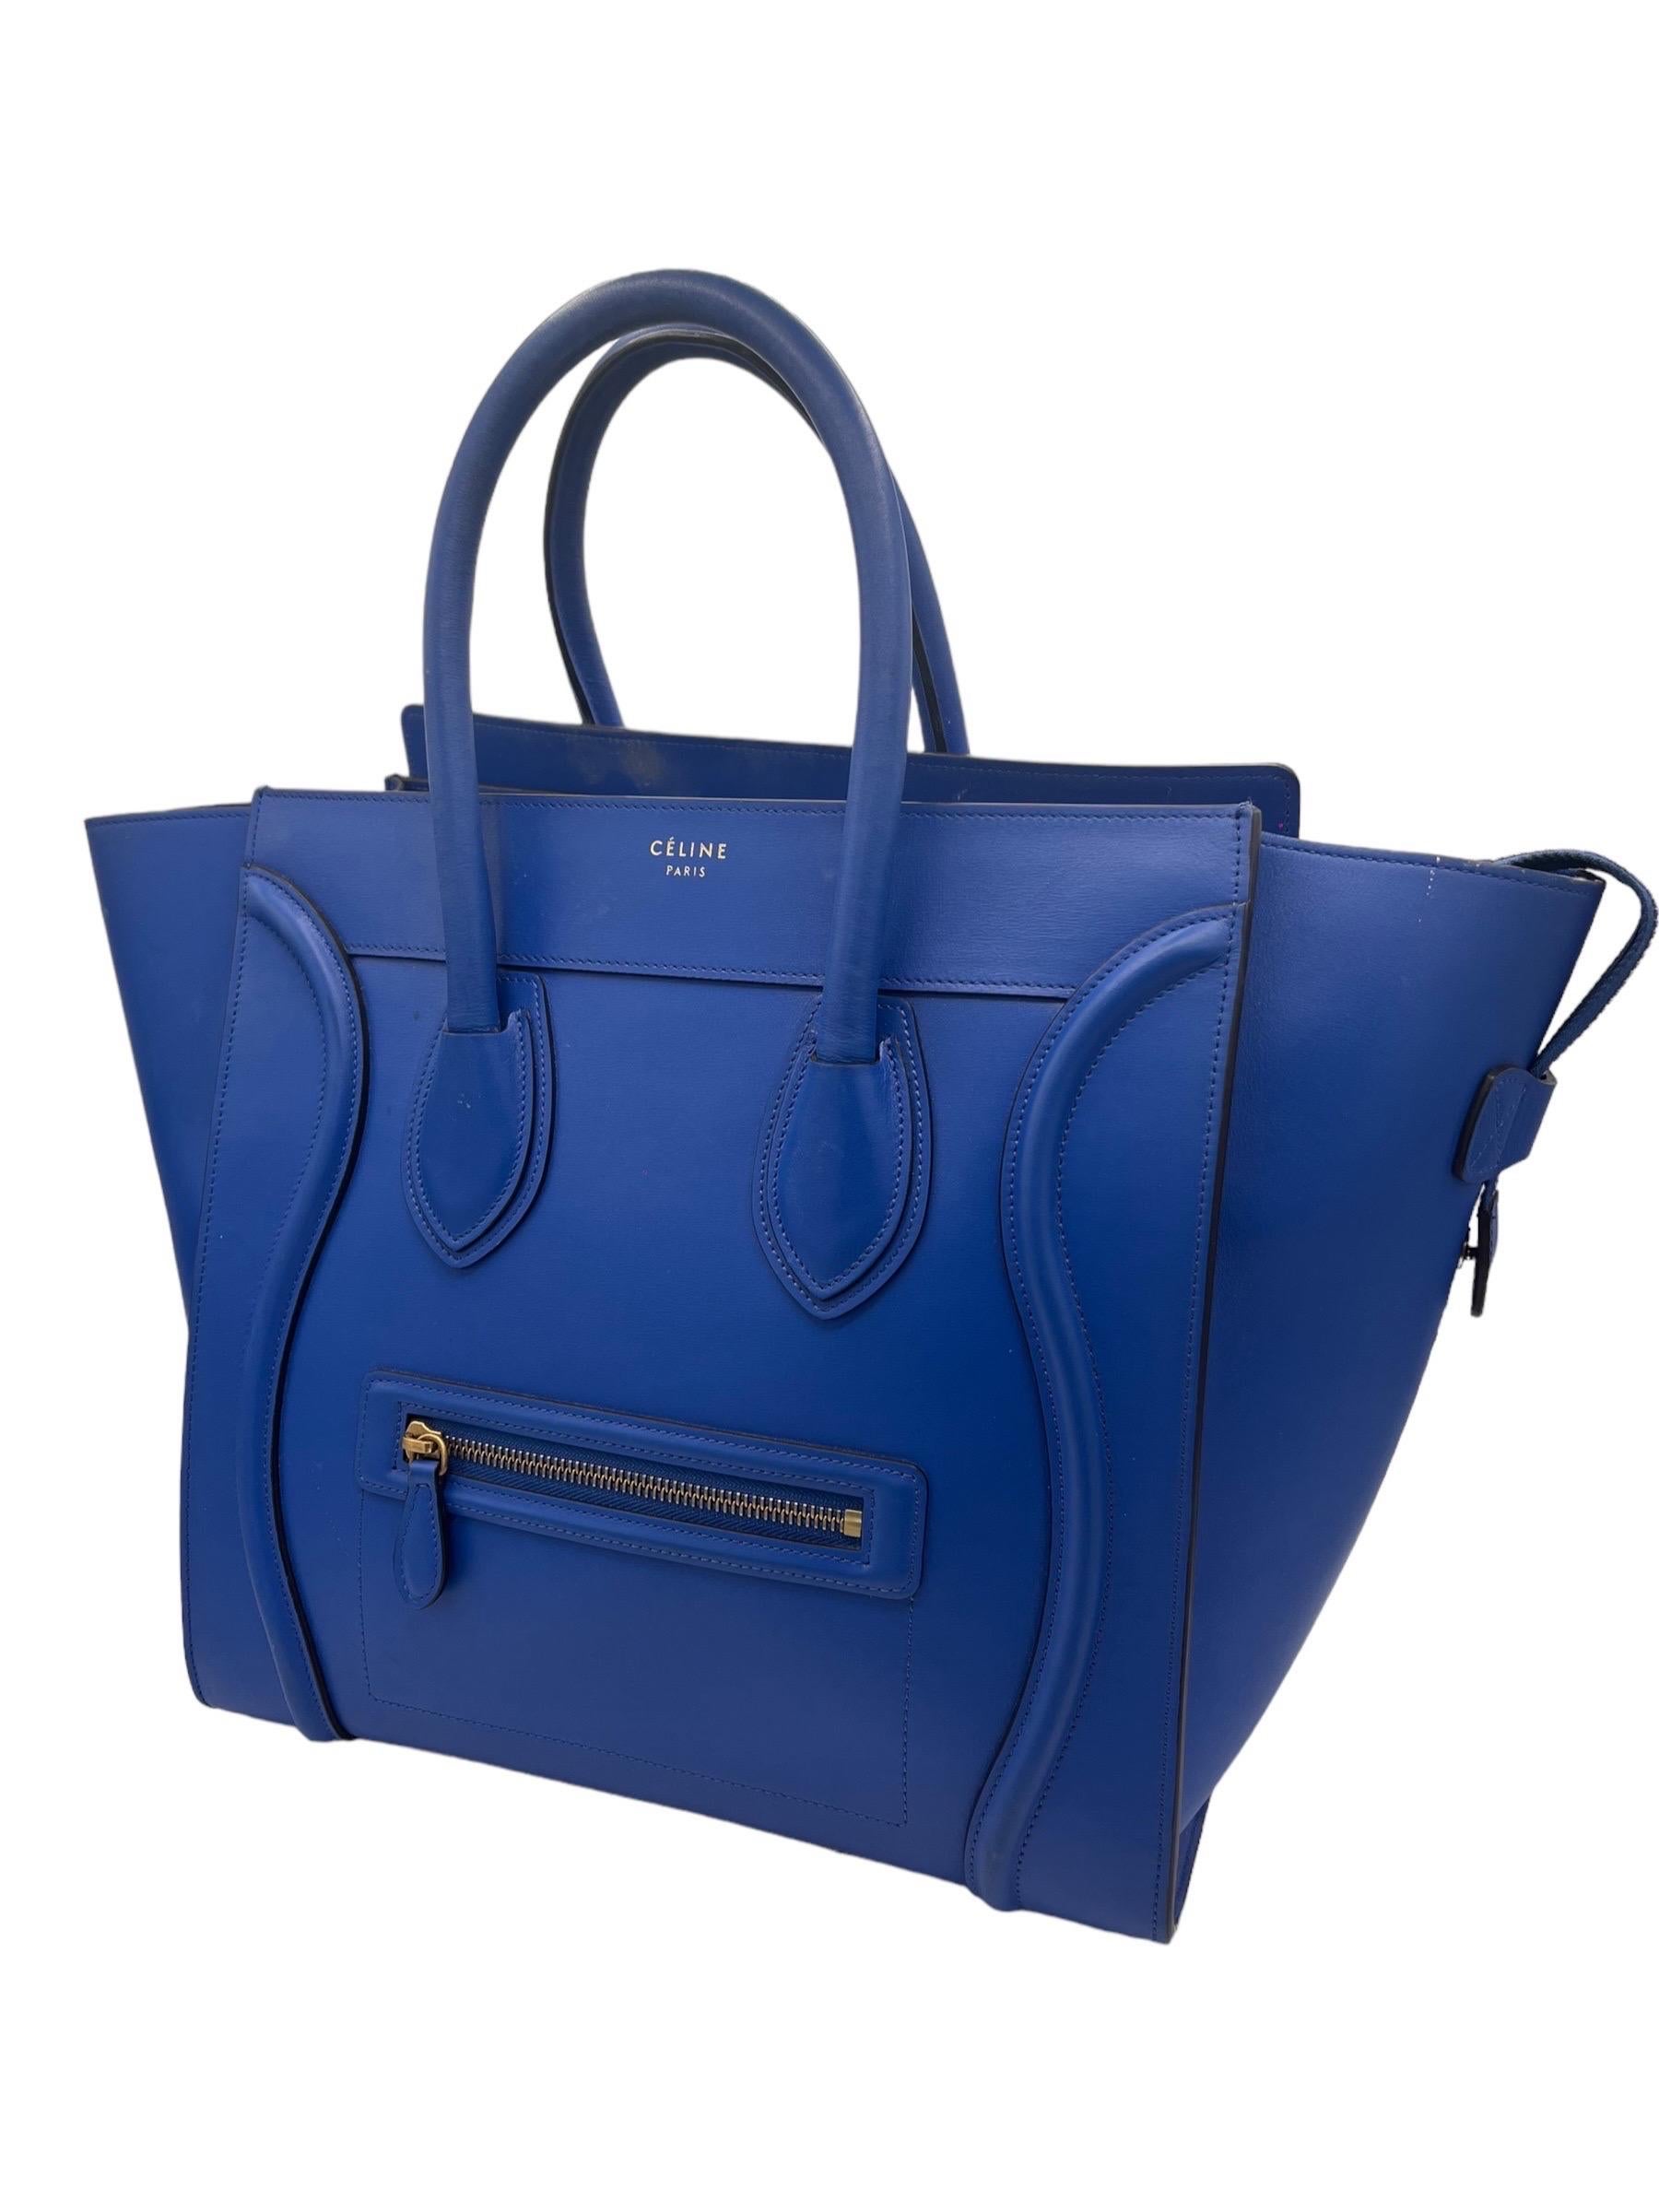 Borsa a Mano Cèline Luggage Medium Blu Elettrico In Good Condition For Sale In Torre Del Greco, IT